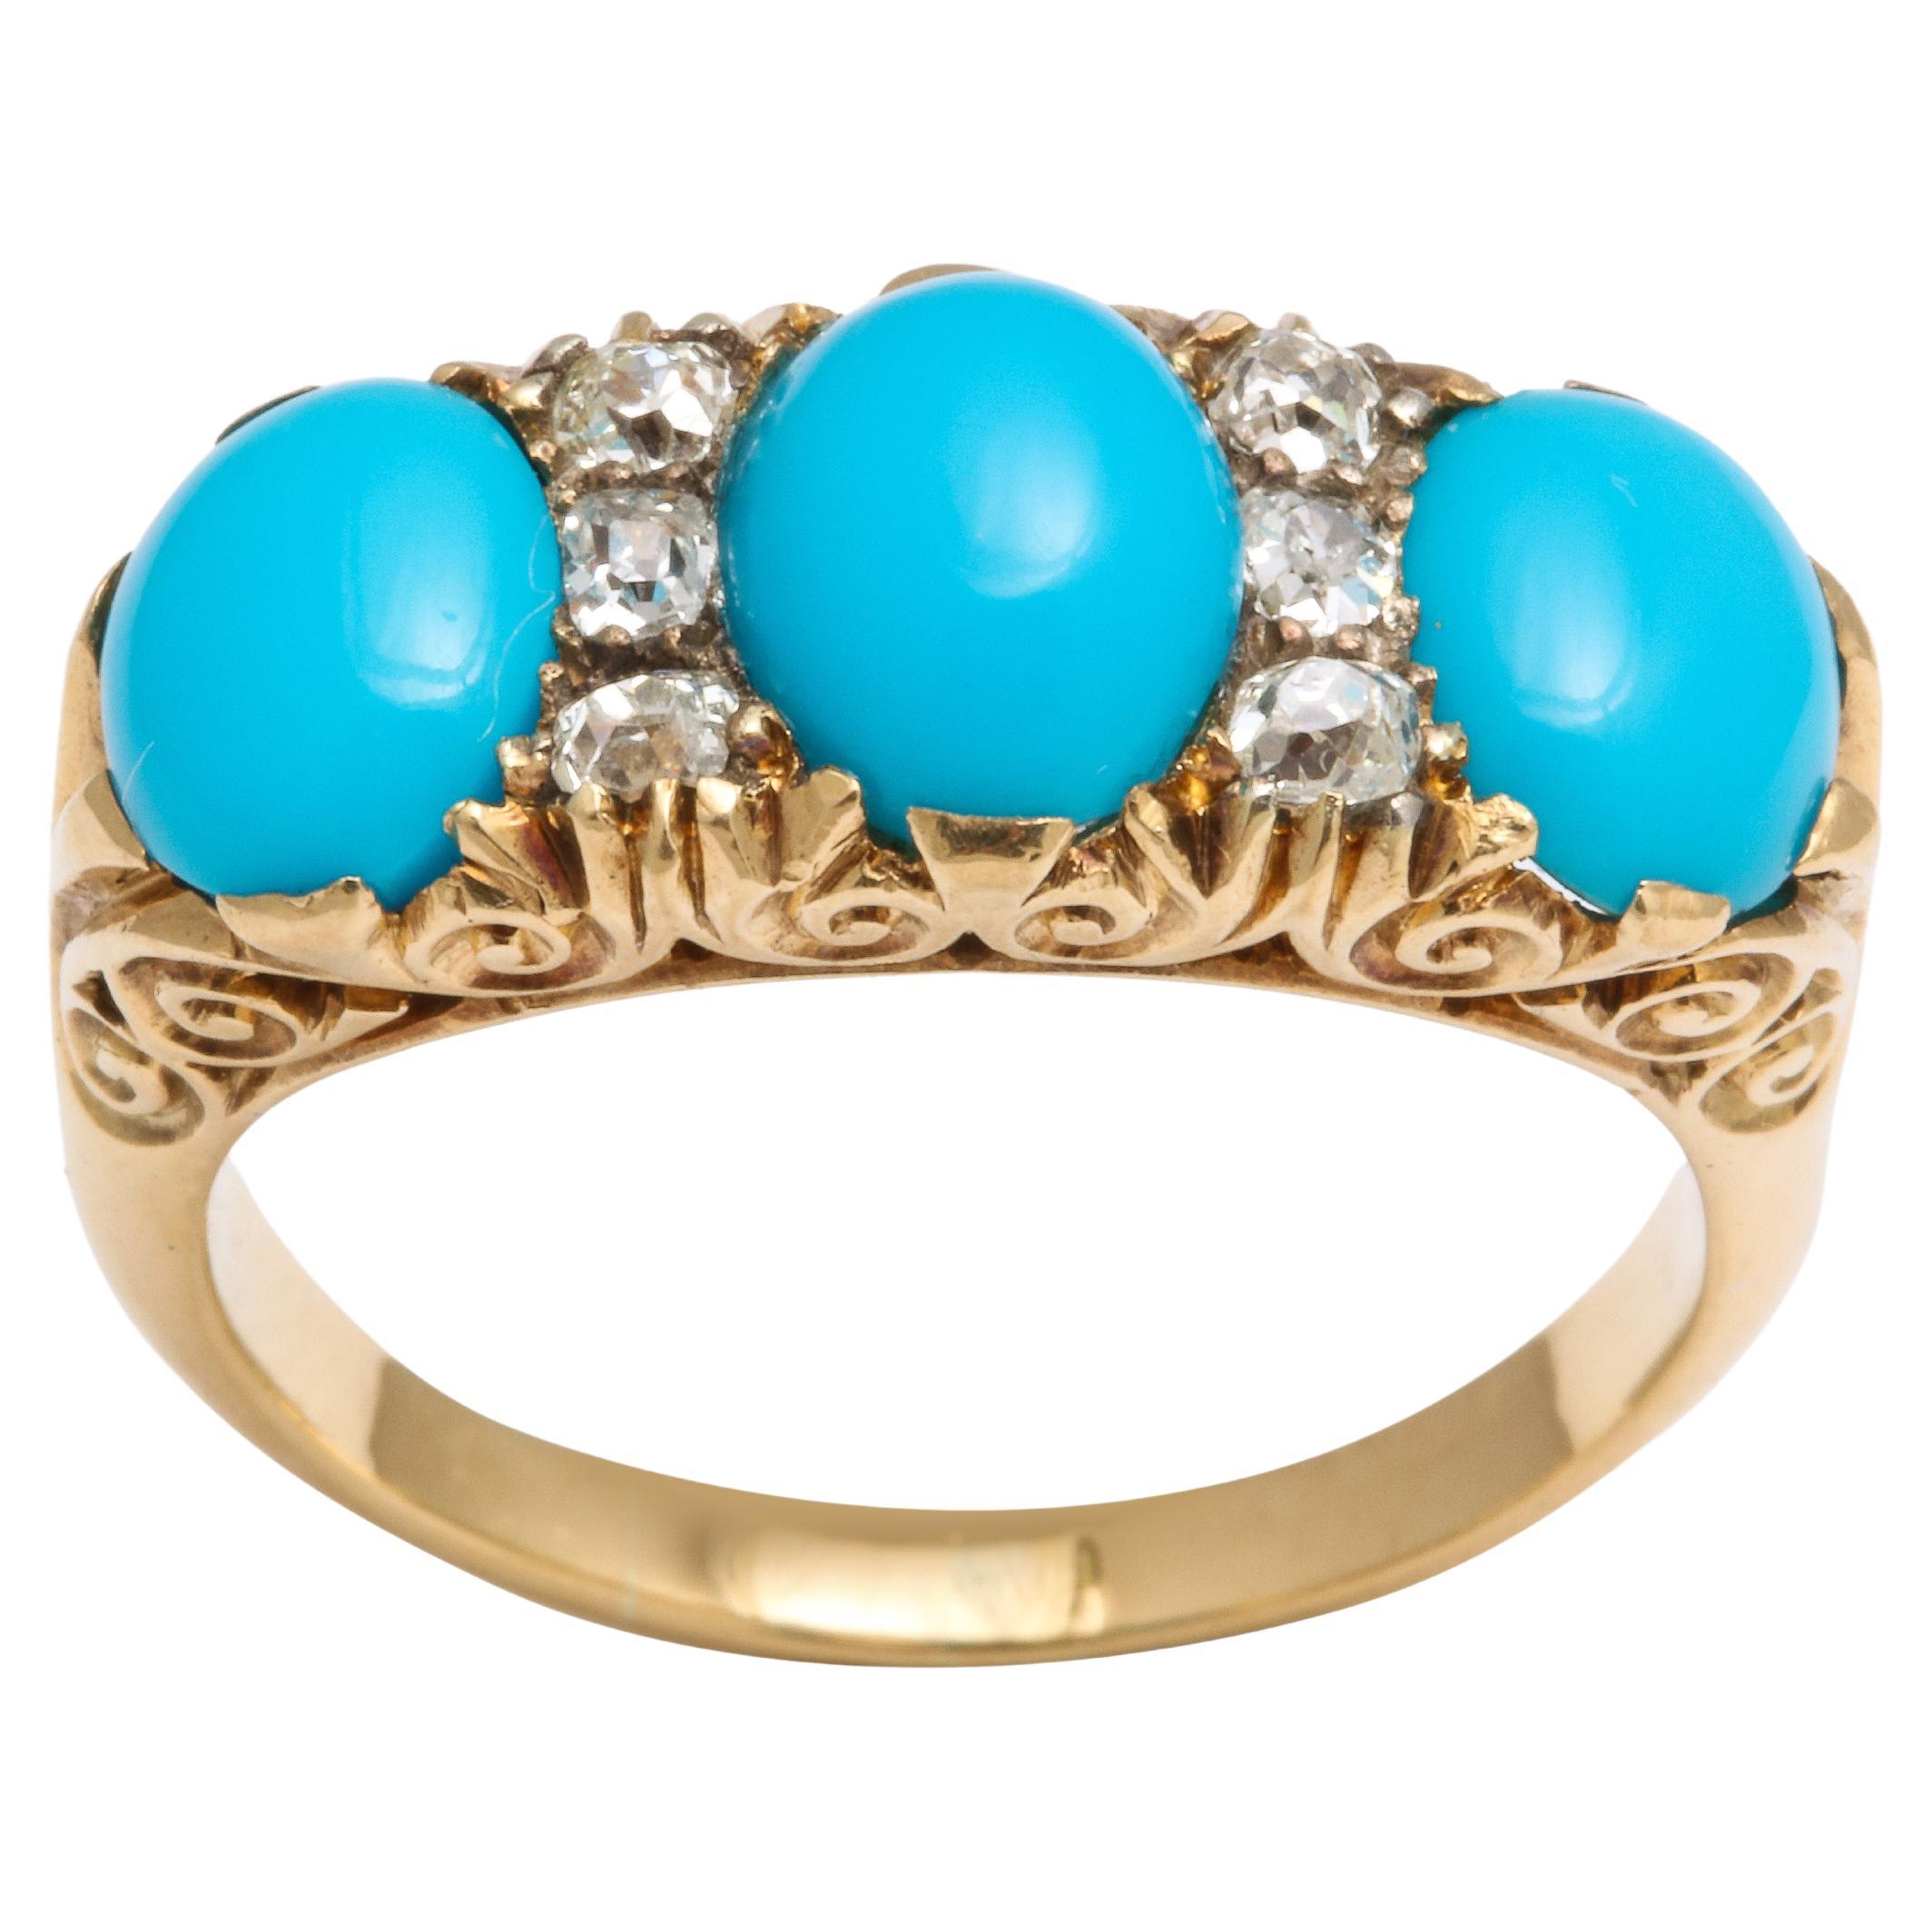 Edwardian 18kt Turquoise and Diamond Ring